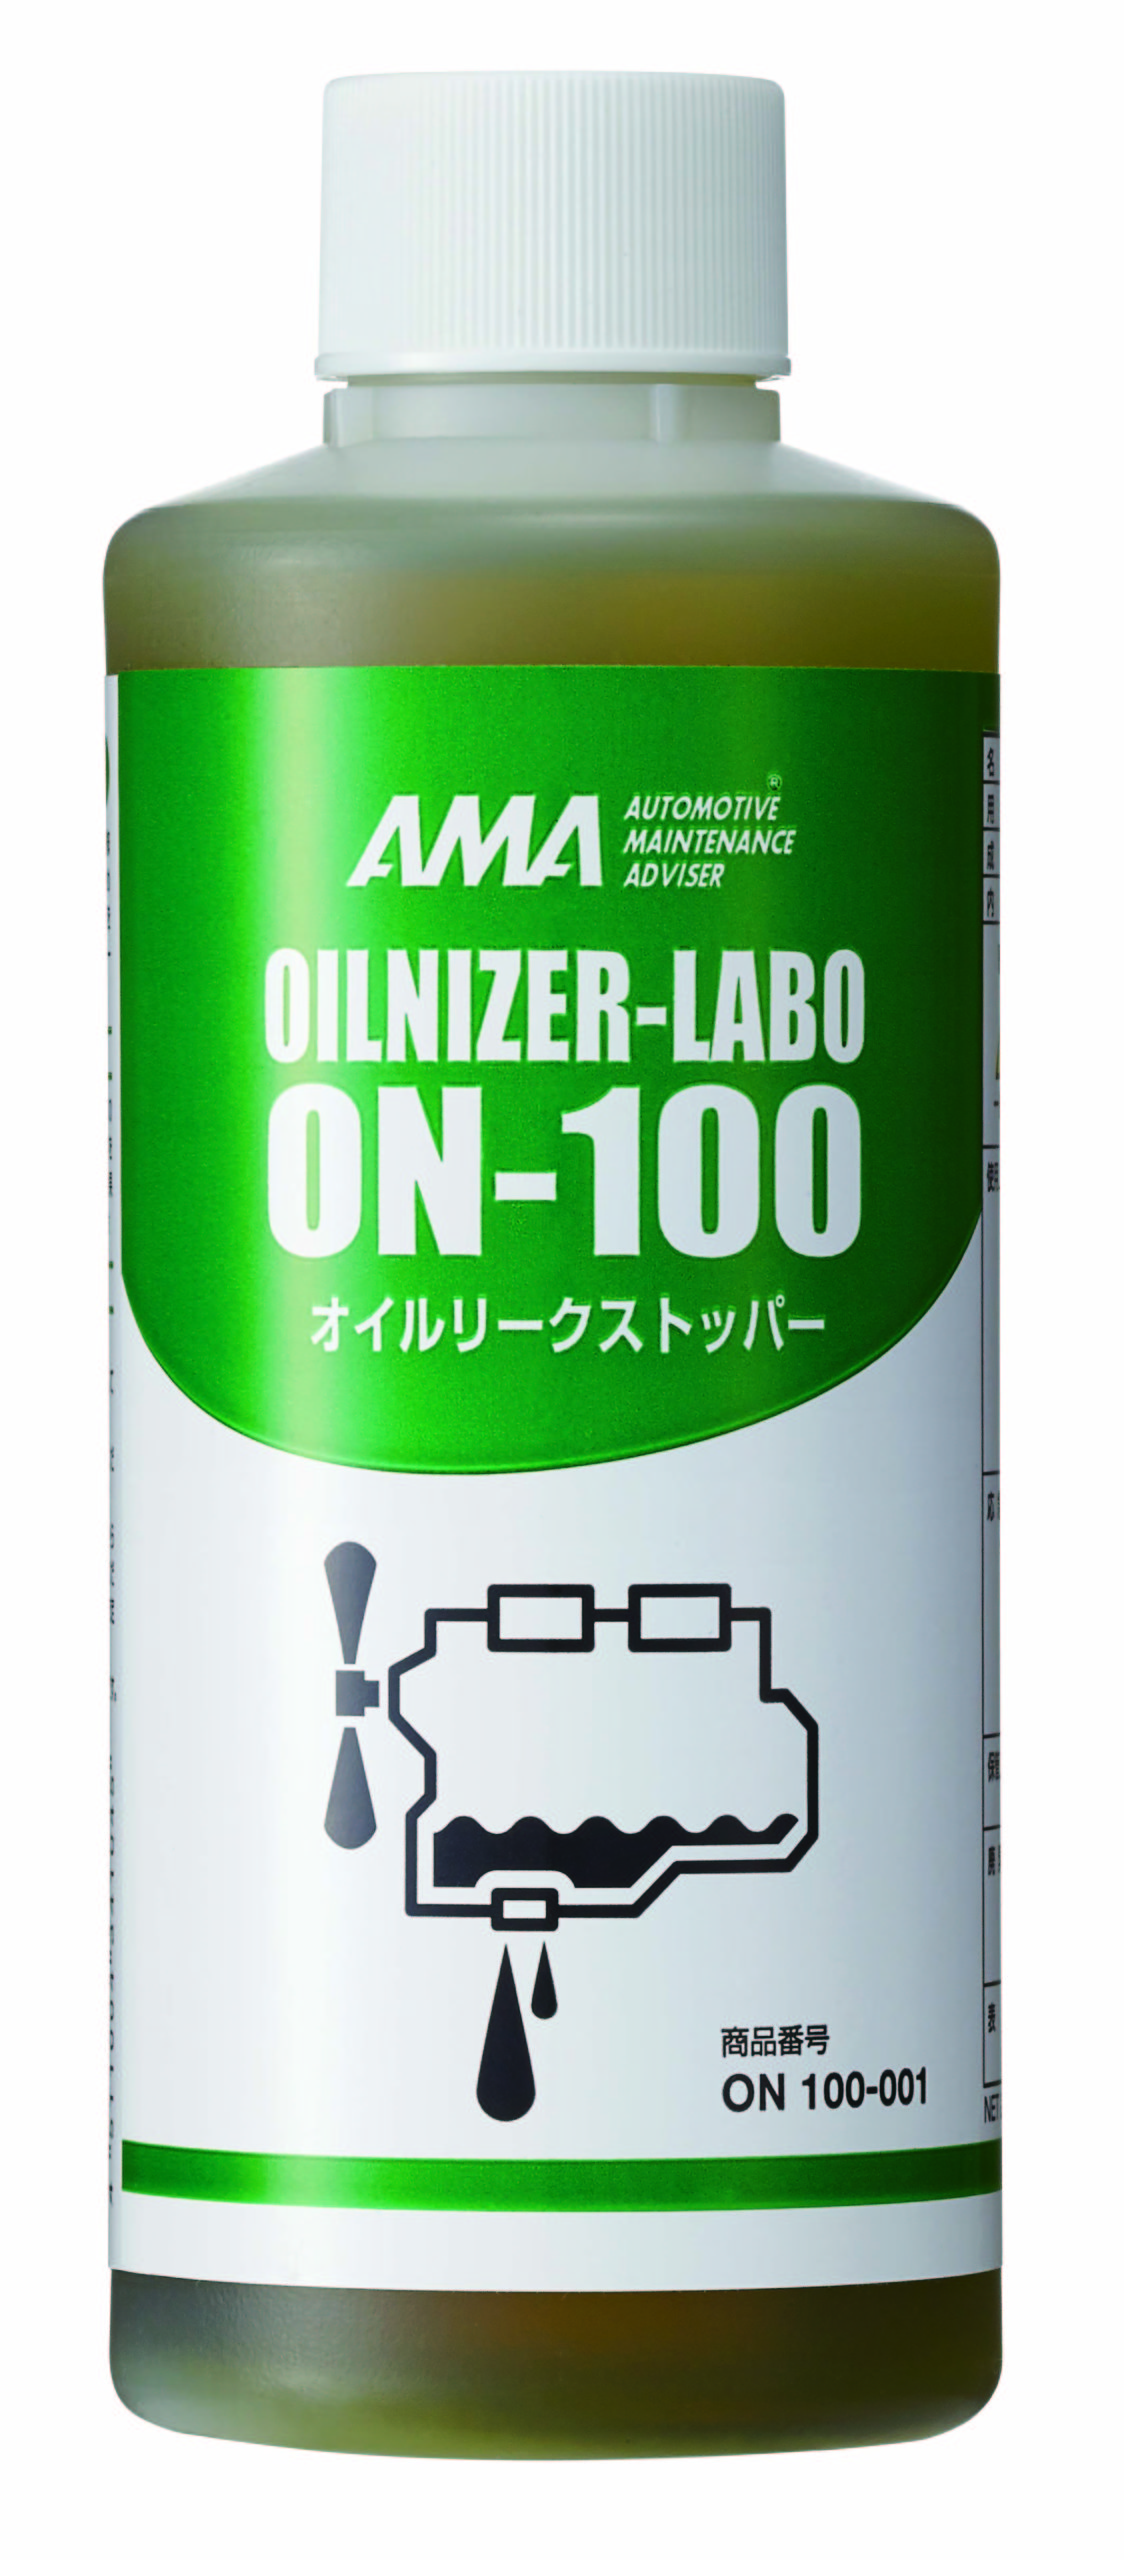 OILNIZER LABO ON-100 – 株式会社 オベロン